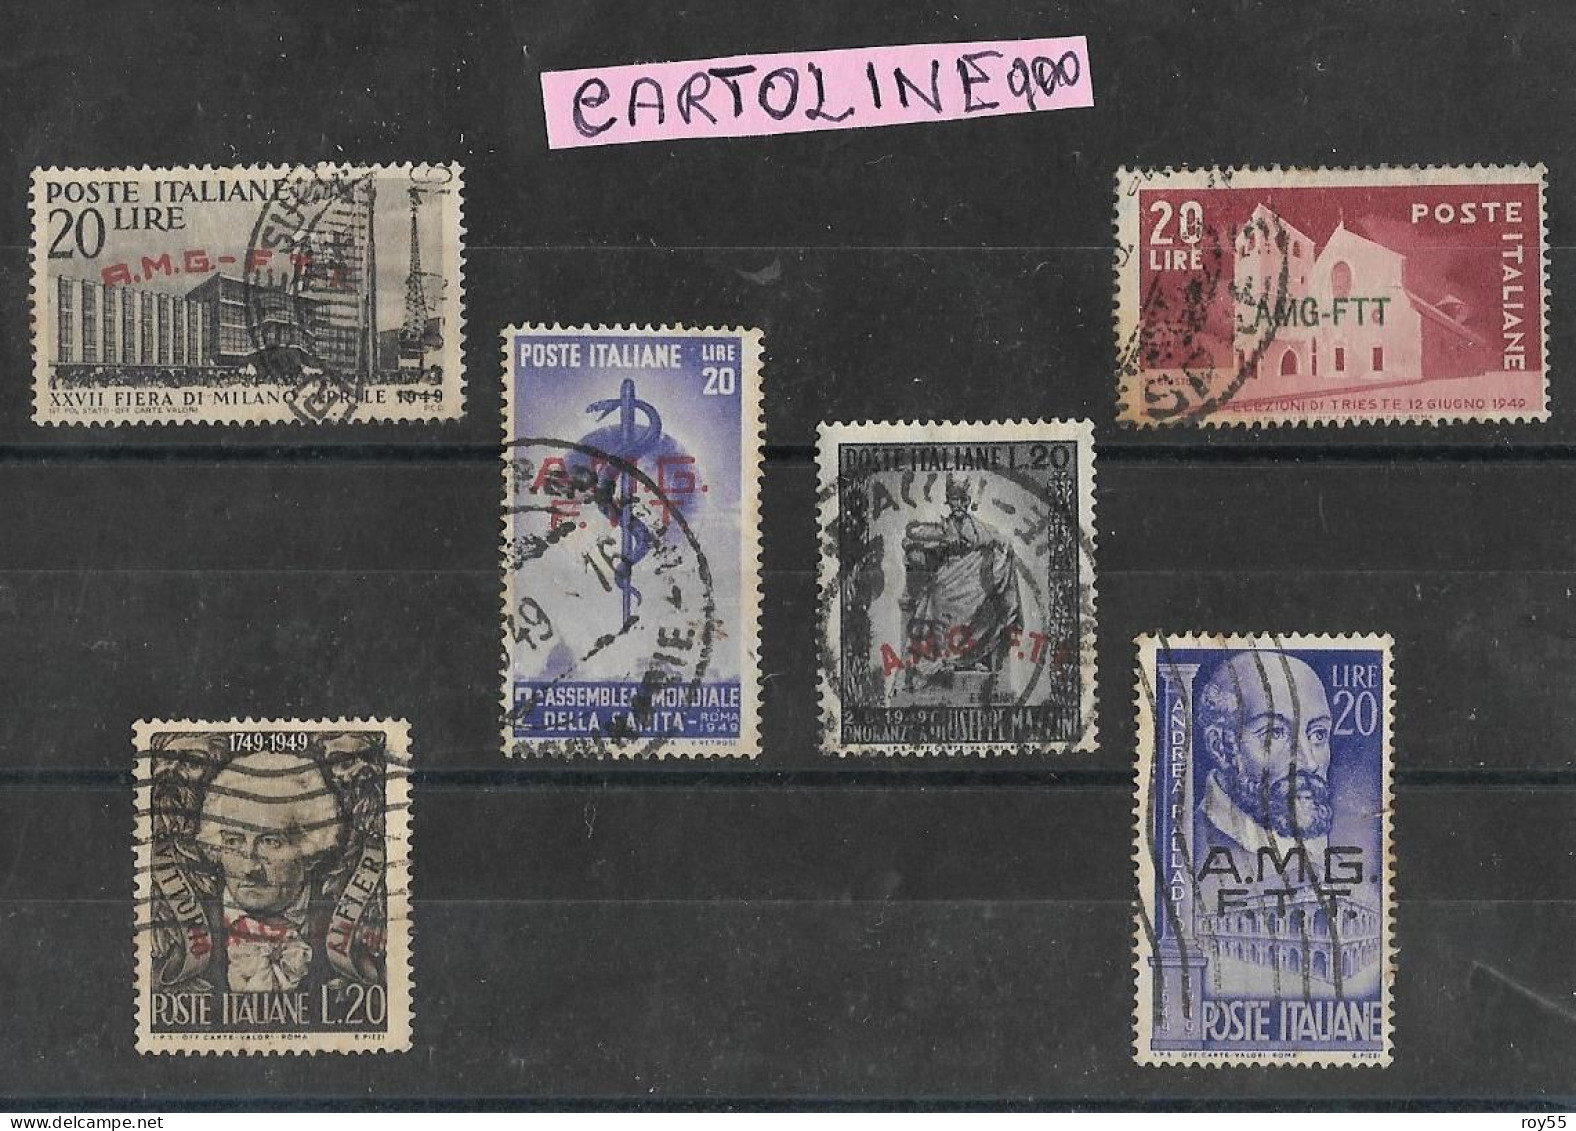 Francobolli Stamps Francobollo Stamp Trieste Zona A  Amg-ftt Sei Francobolli Mono Serie Singole Usati Annata 1949 - Used